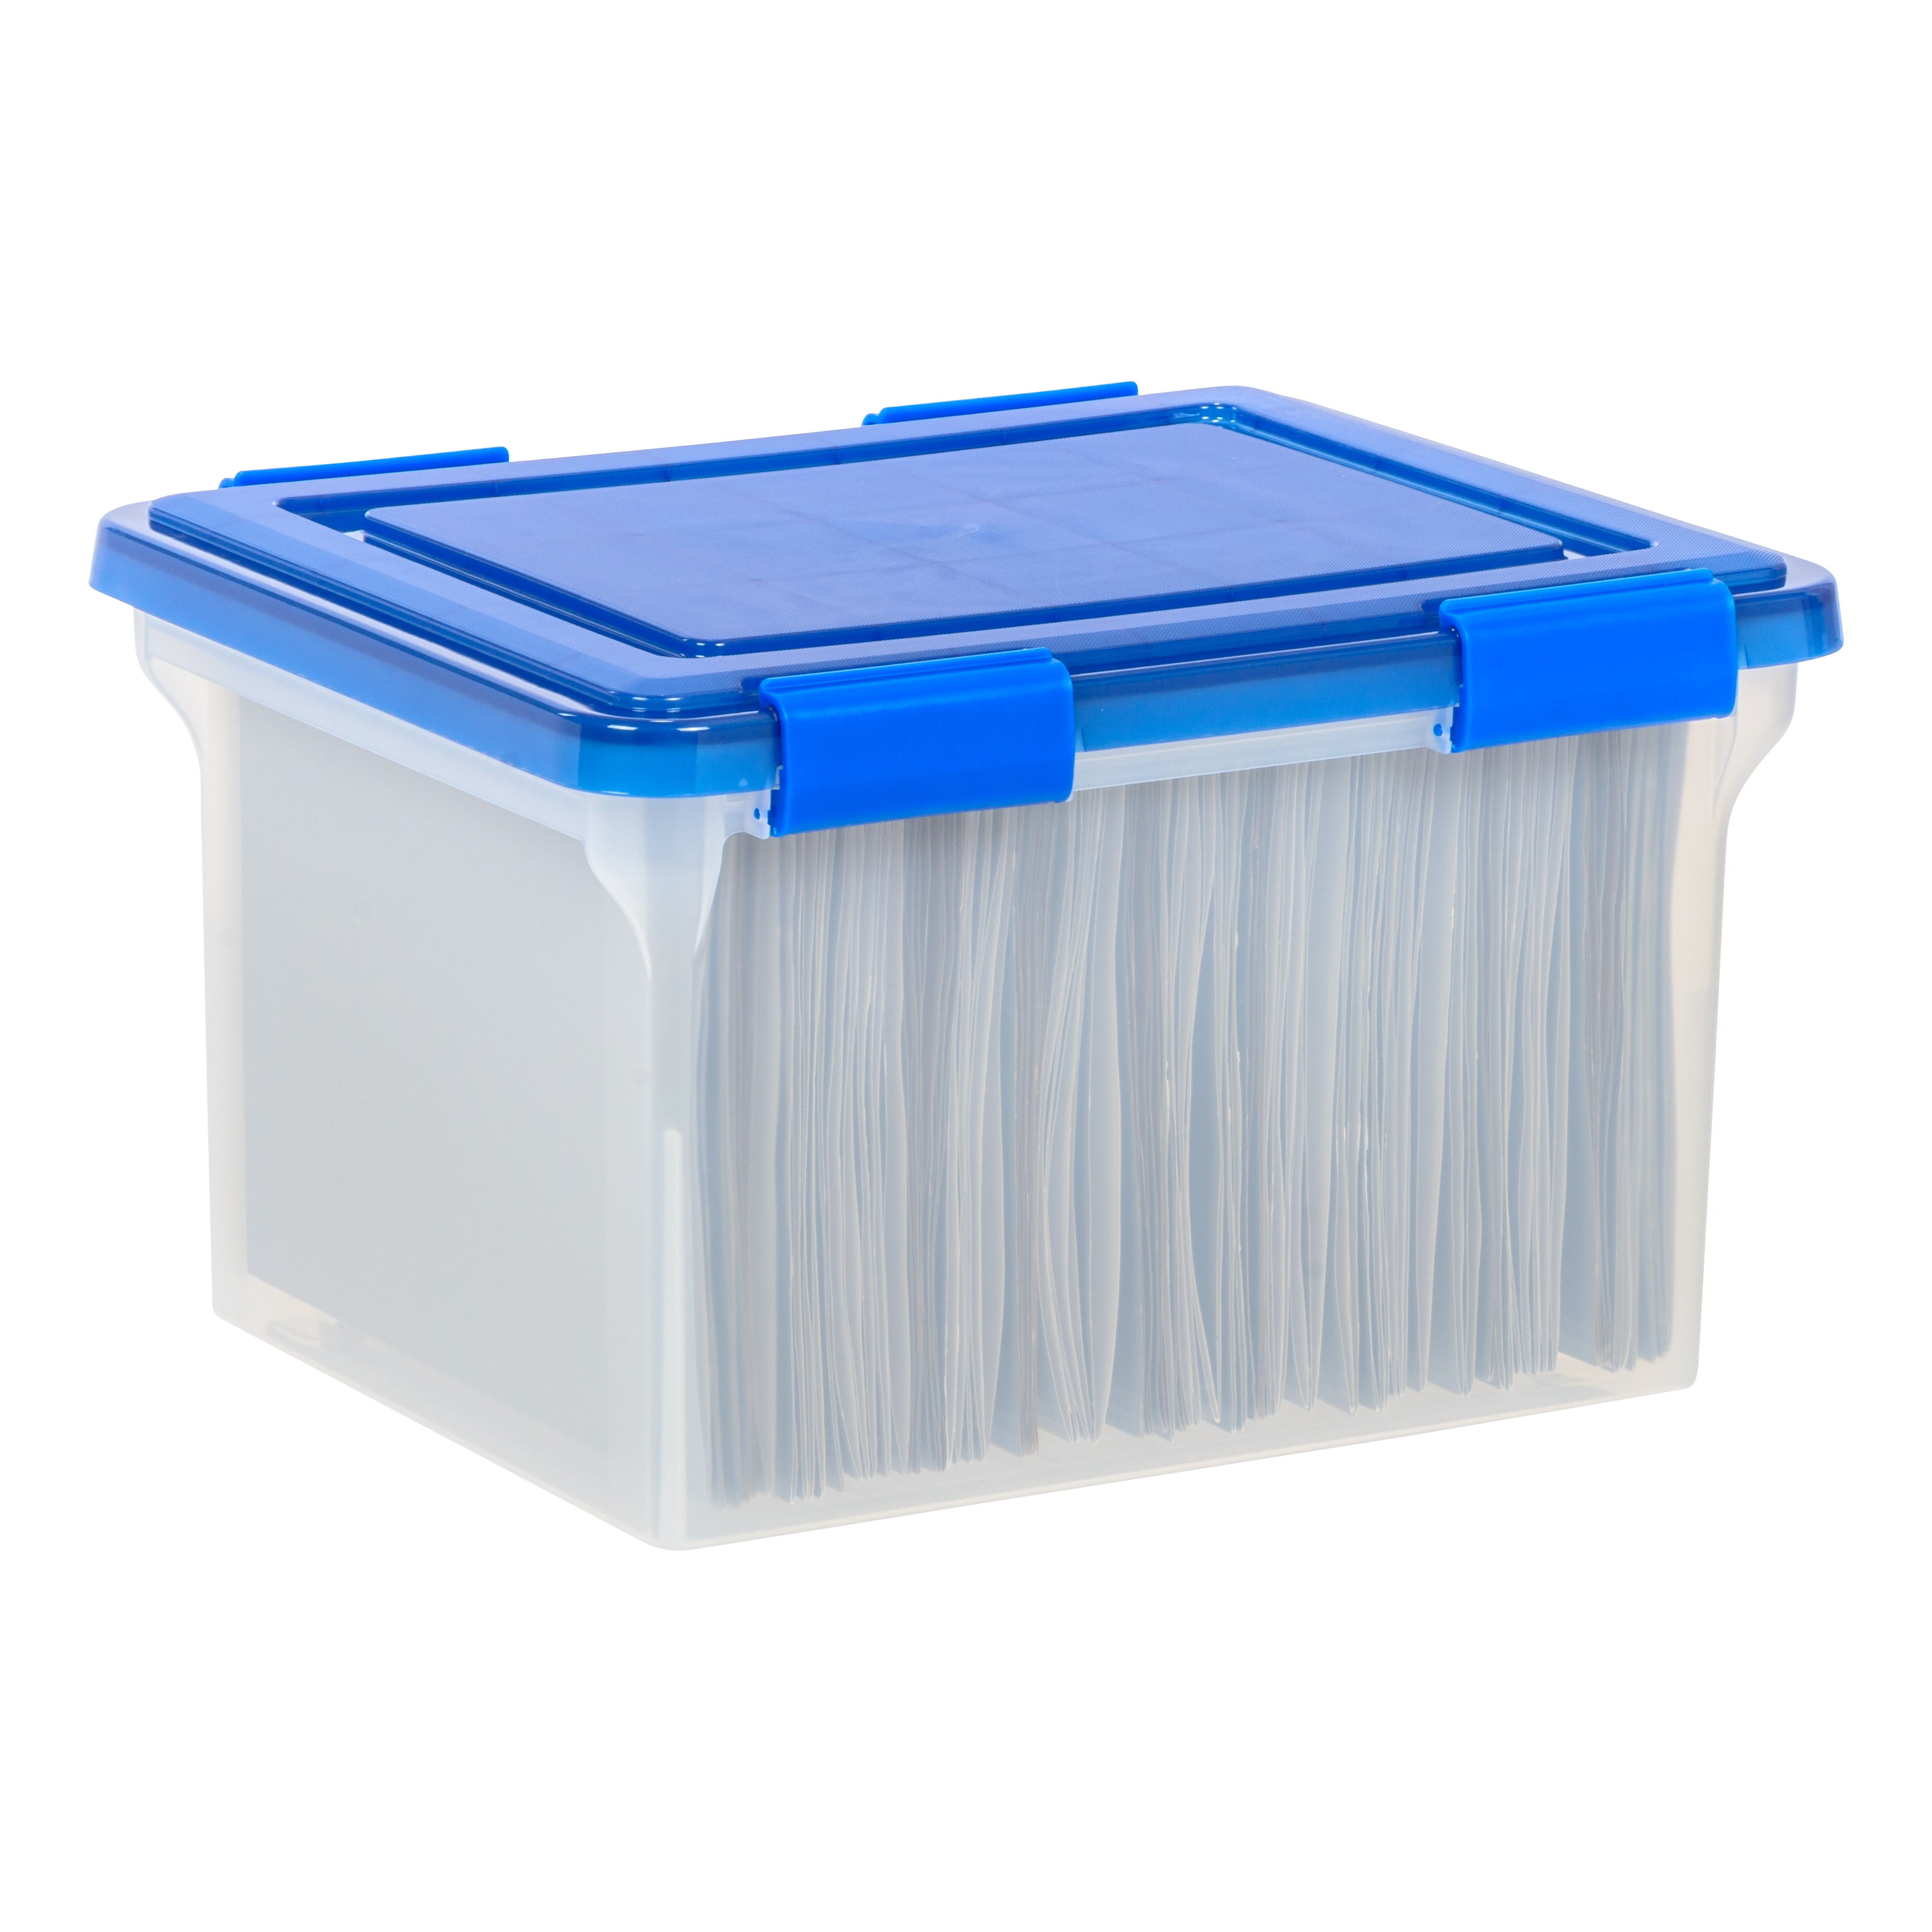 Iris Weathertight Storage File Box, Letter/Legal Size, 10 9/10 x